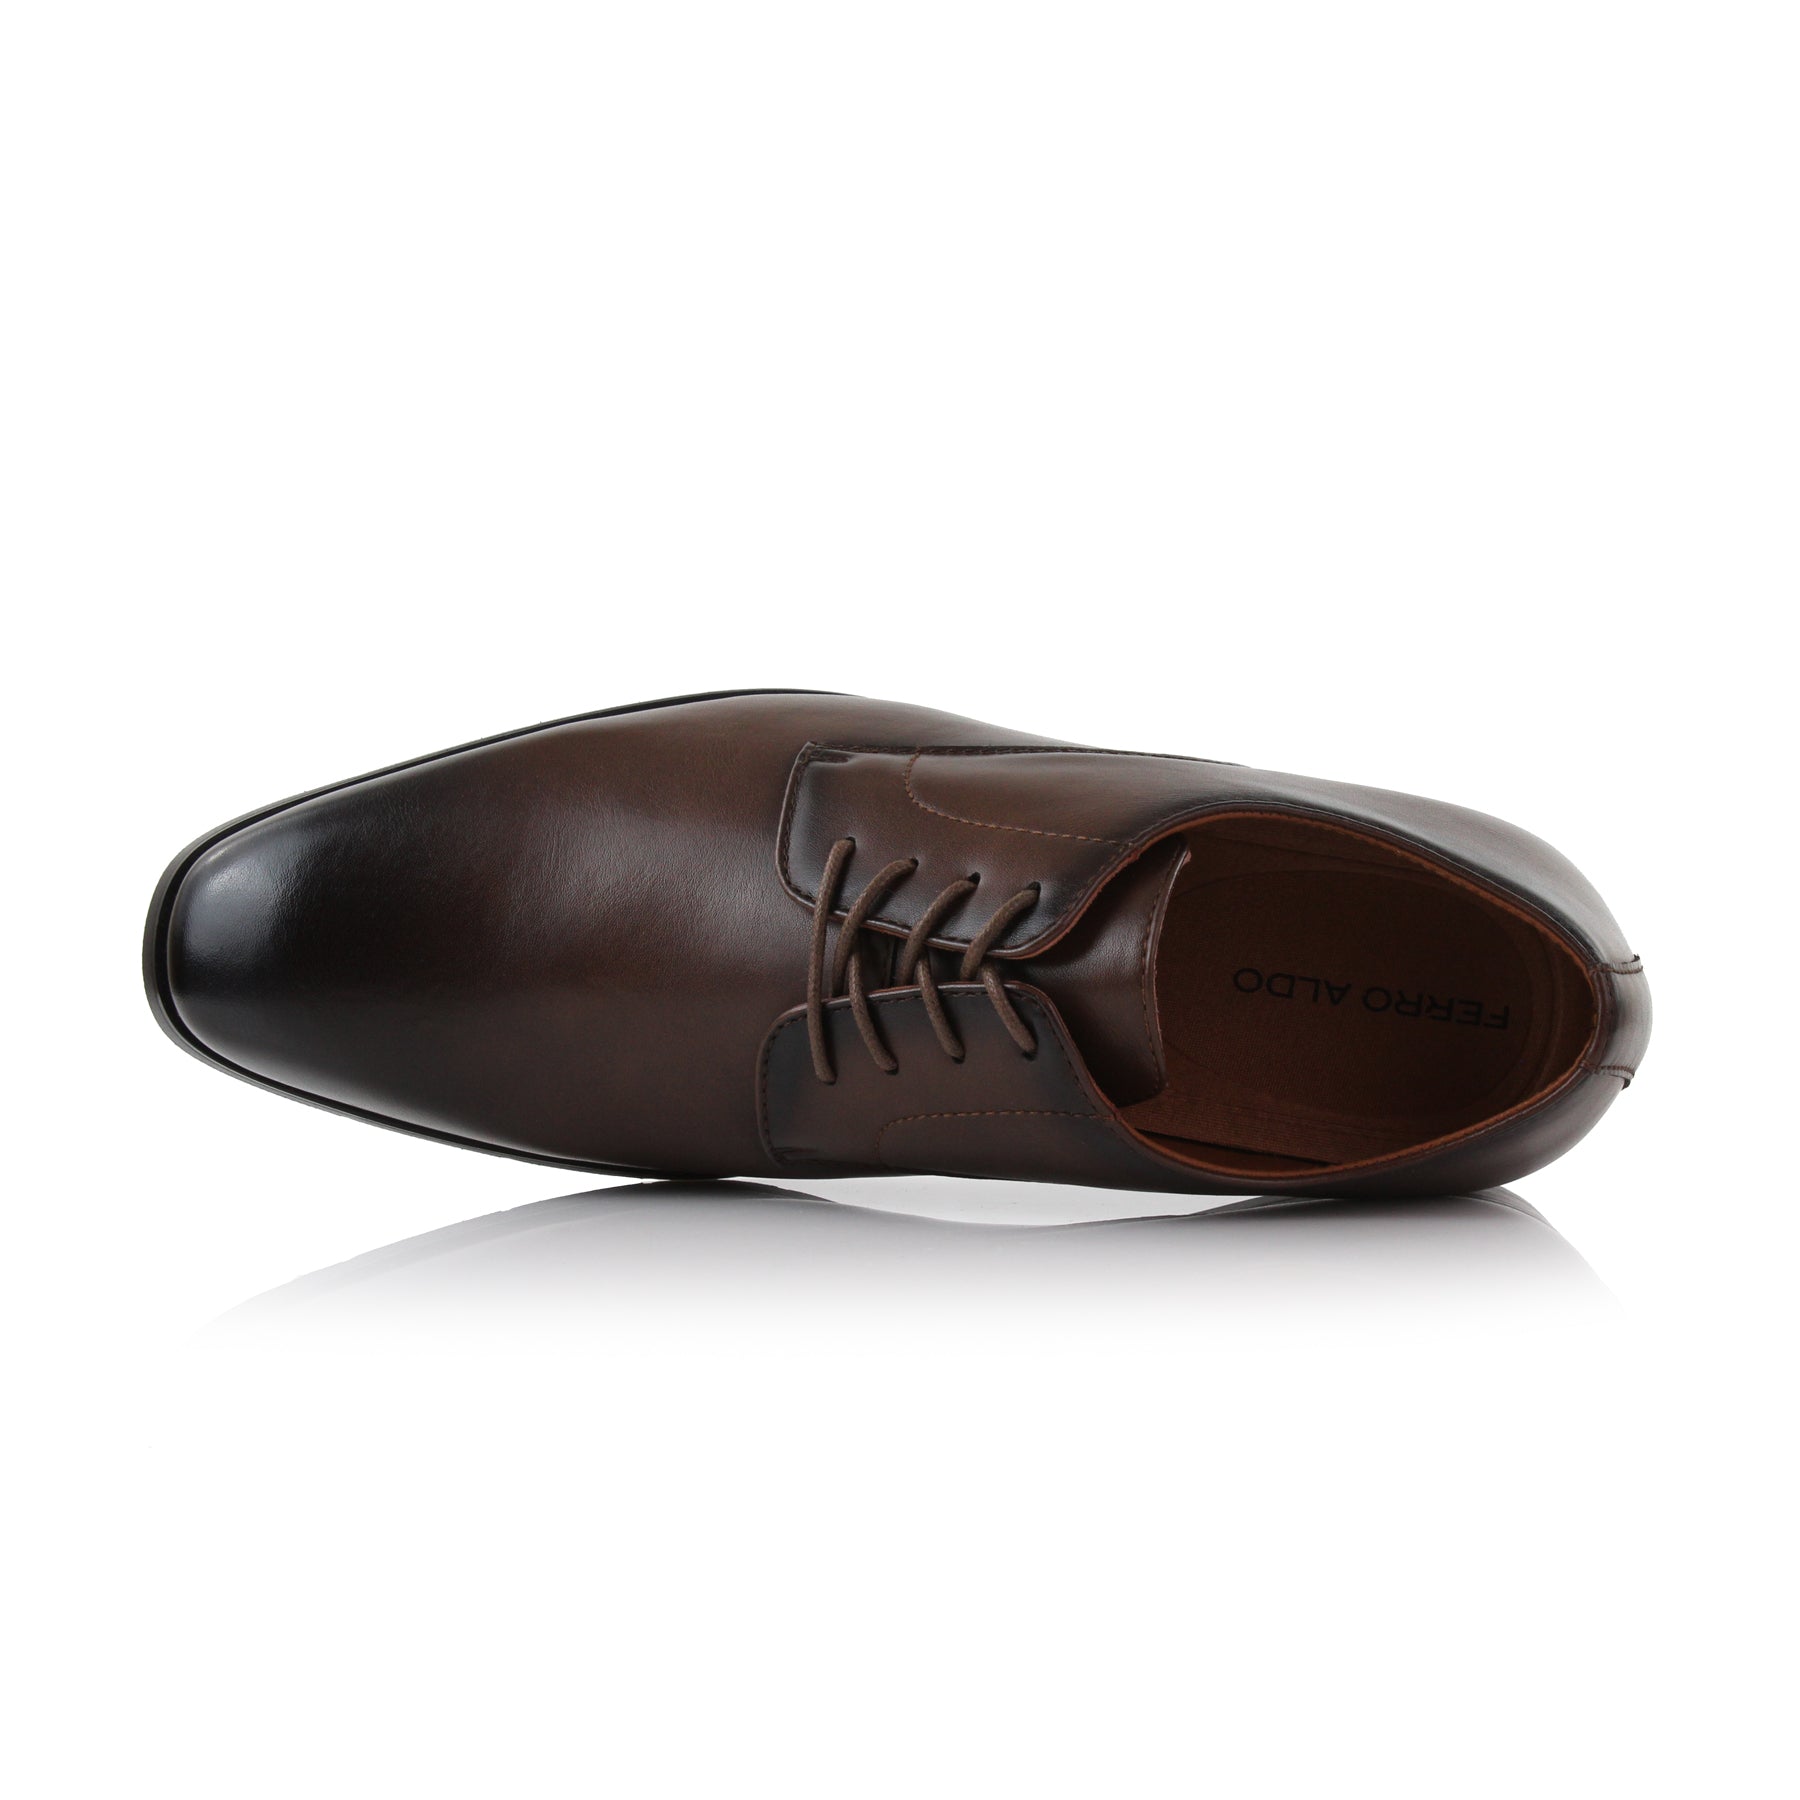 Plain Toe Derby Shoes | Alvin by Ferro Aldo | Conal Footwear | Top-Down Angle View